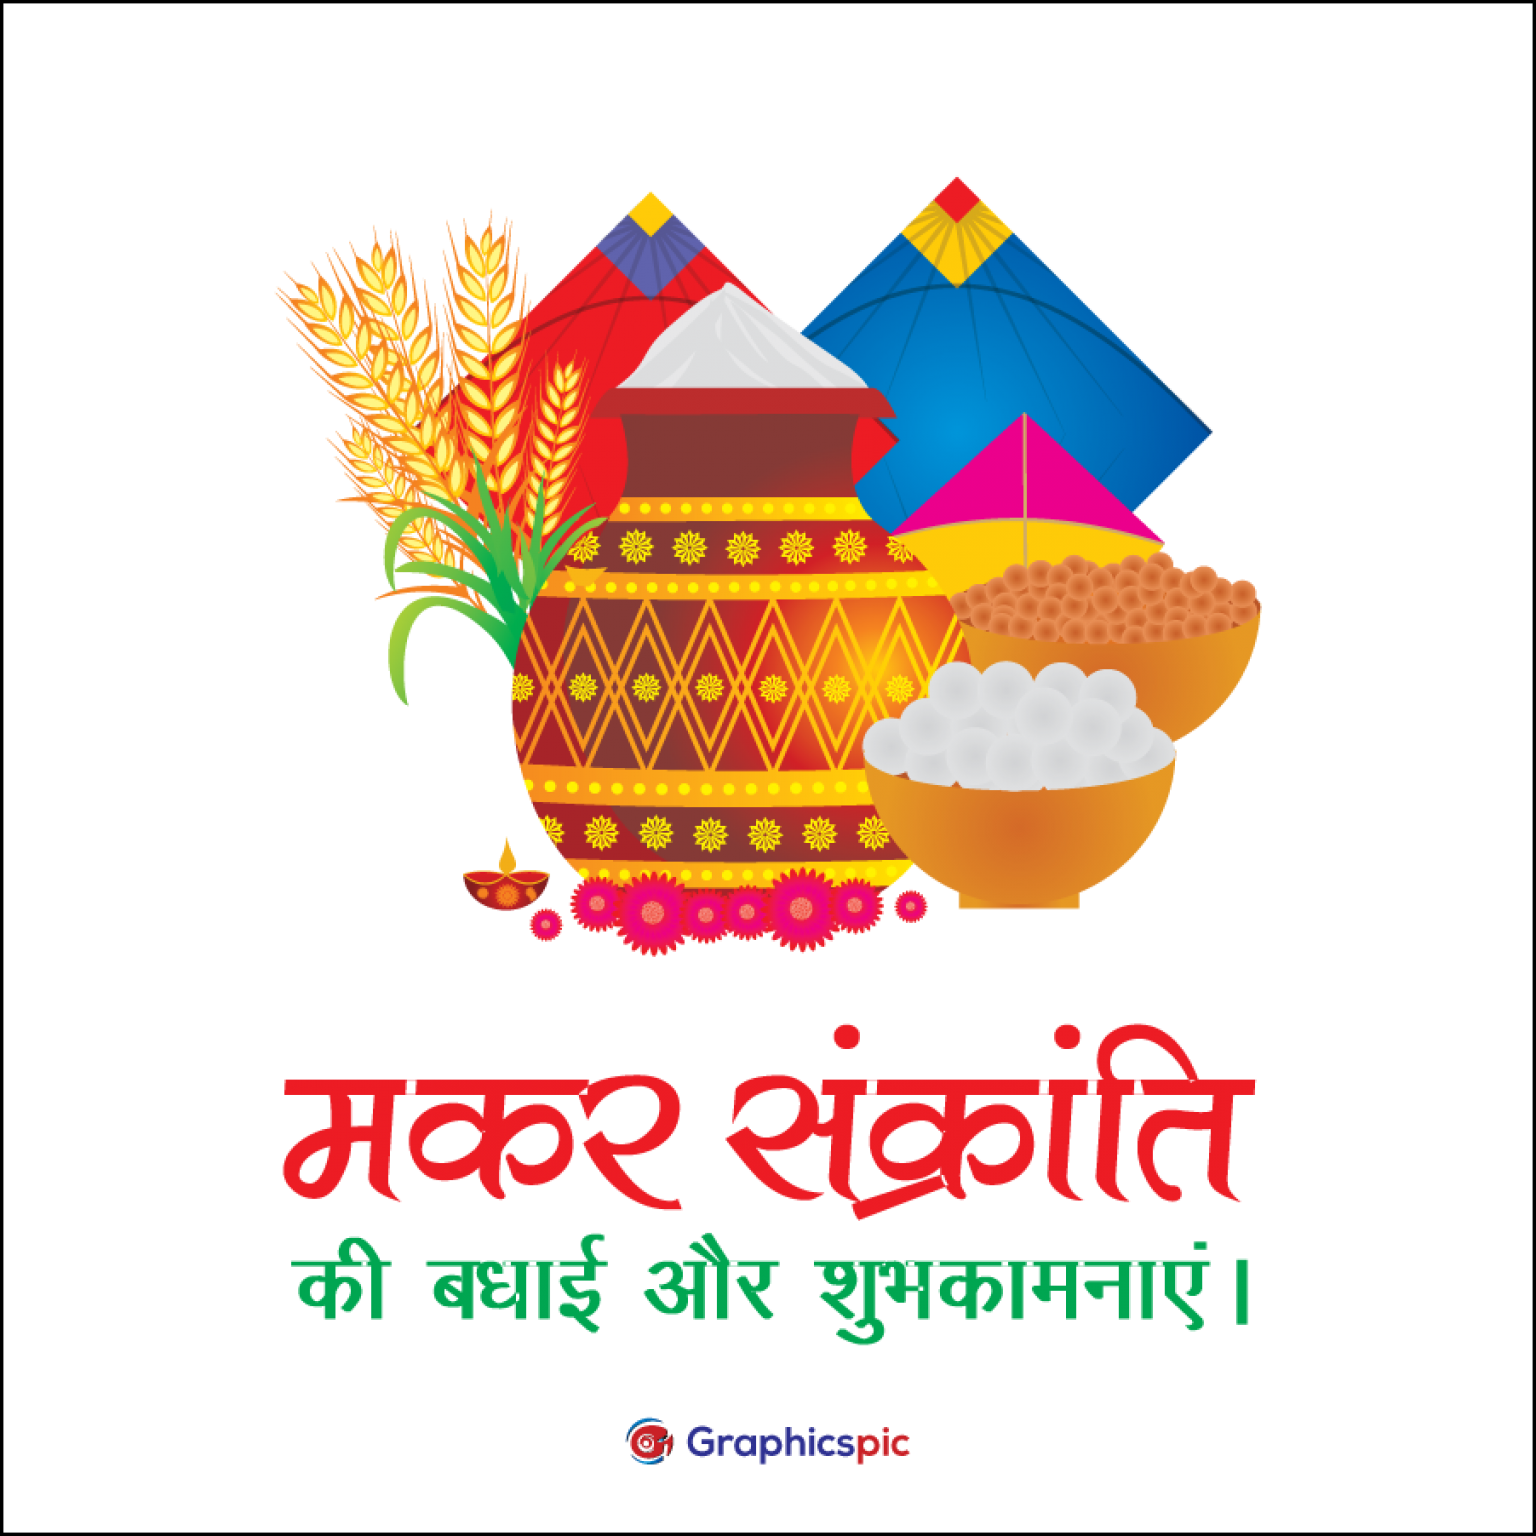 Happy makar sankranti festival banner with kite design free vector